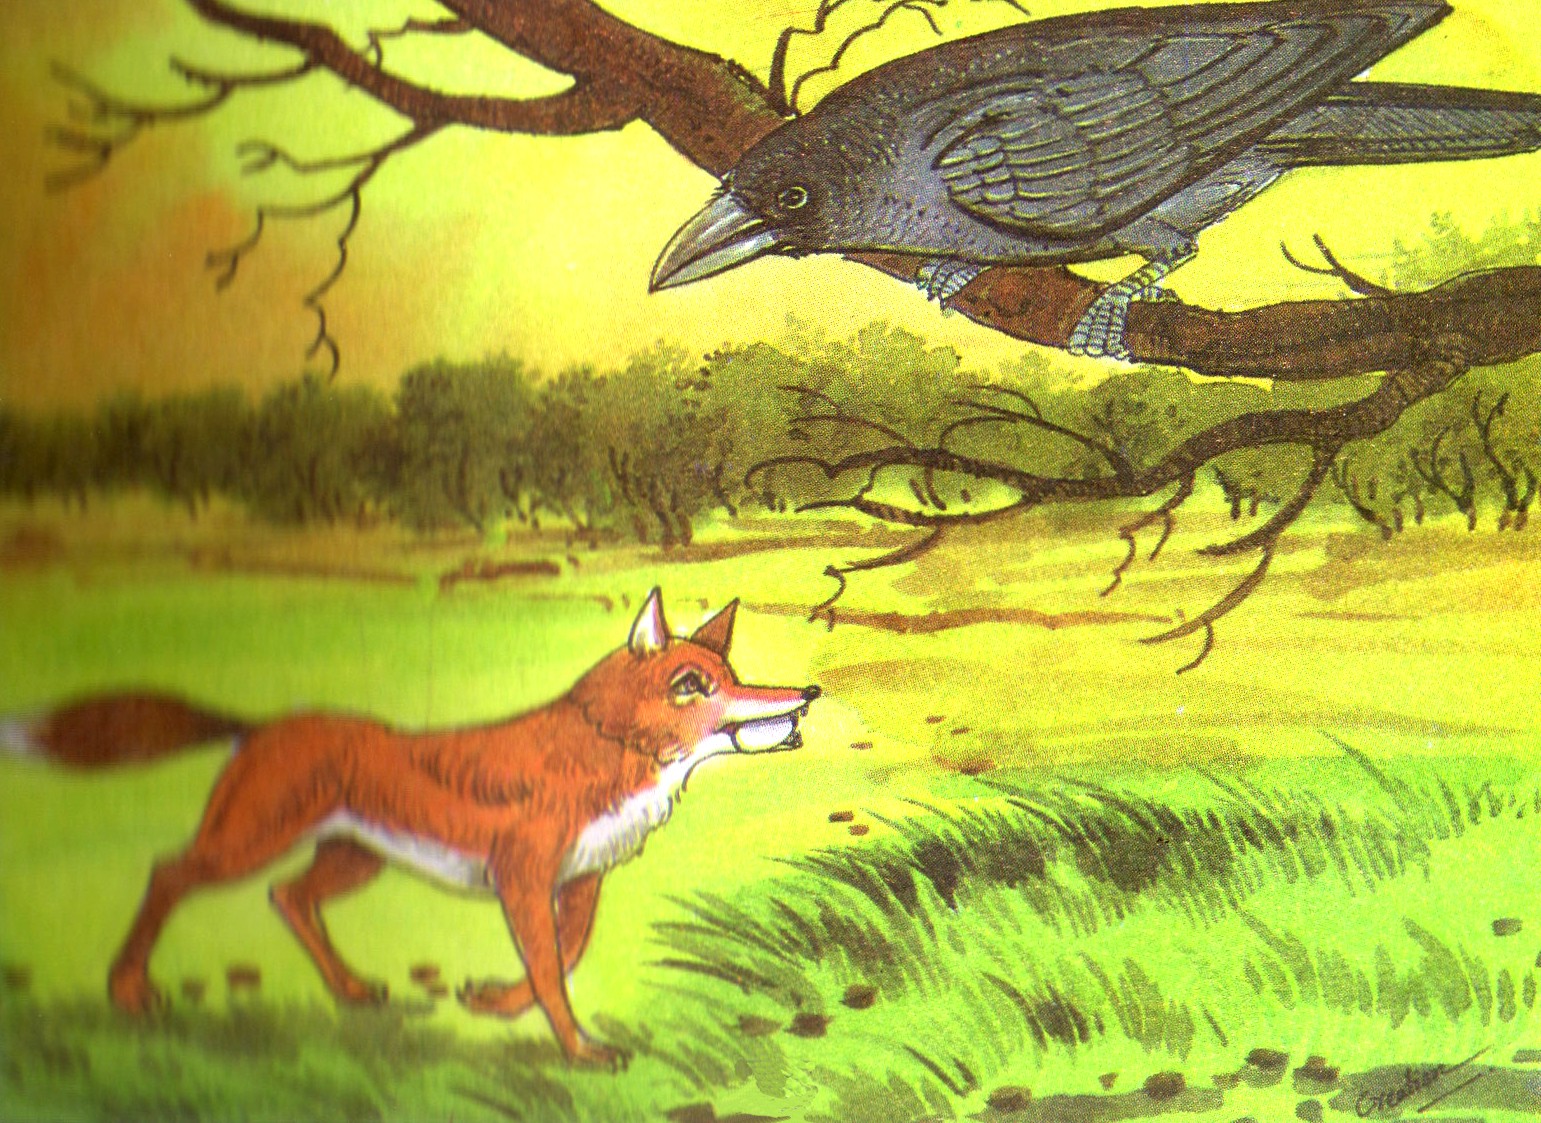 Lizardlars the Fox and the Crow